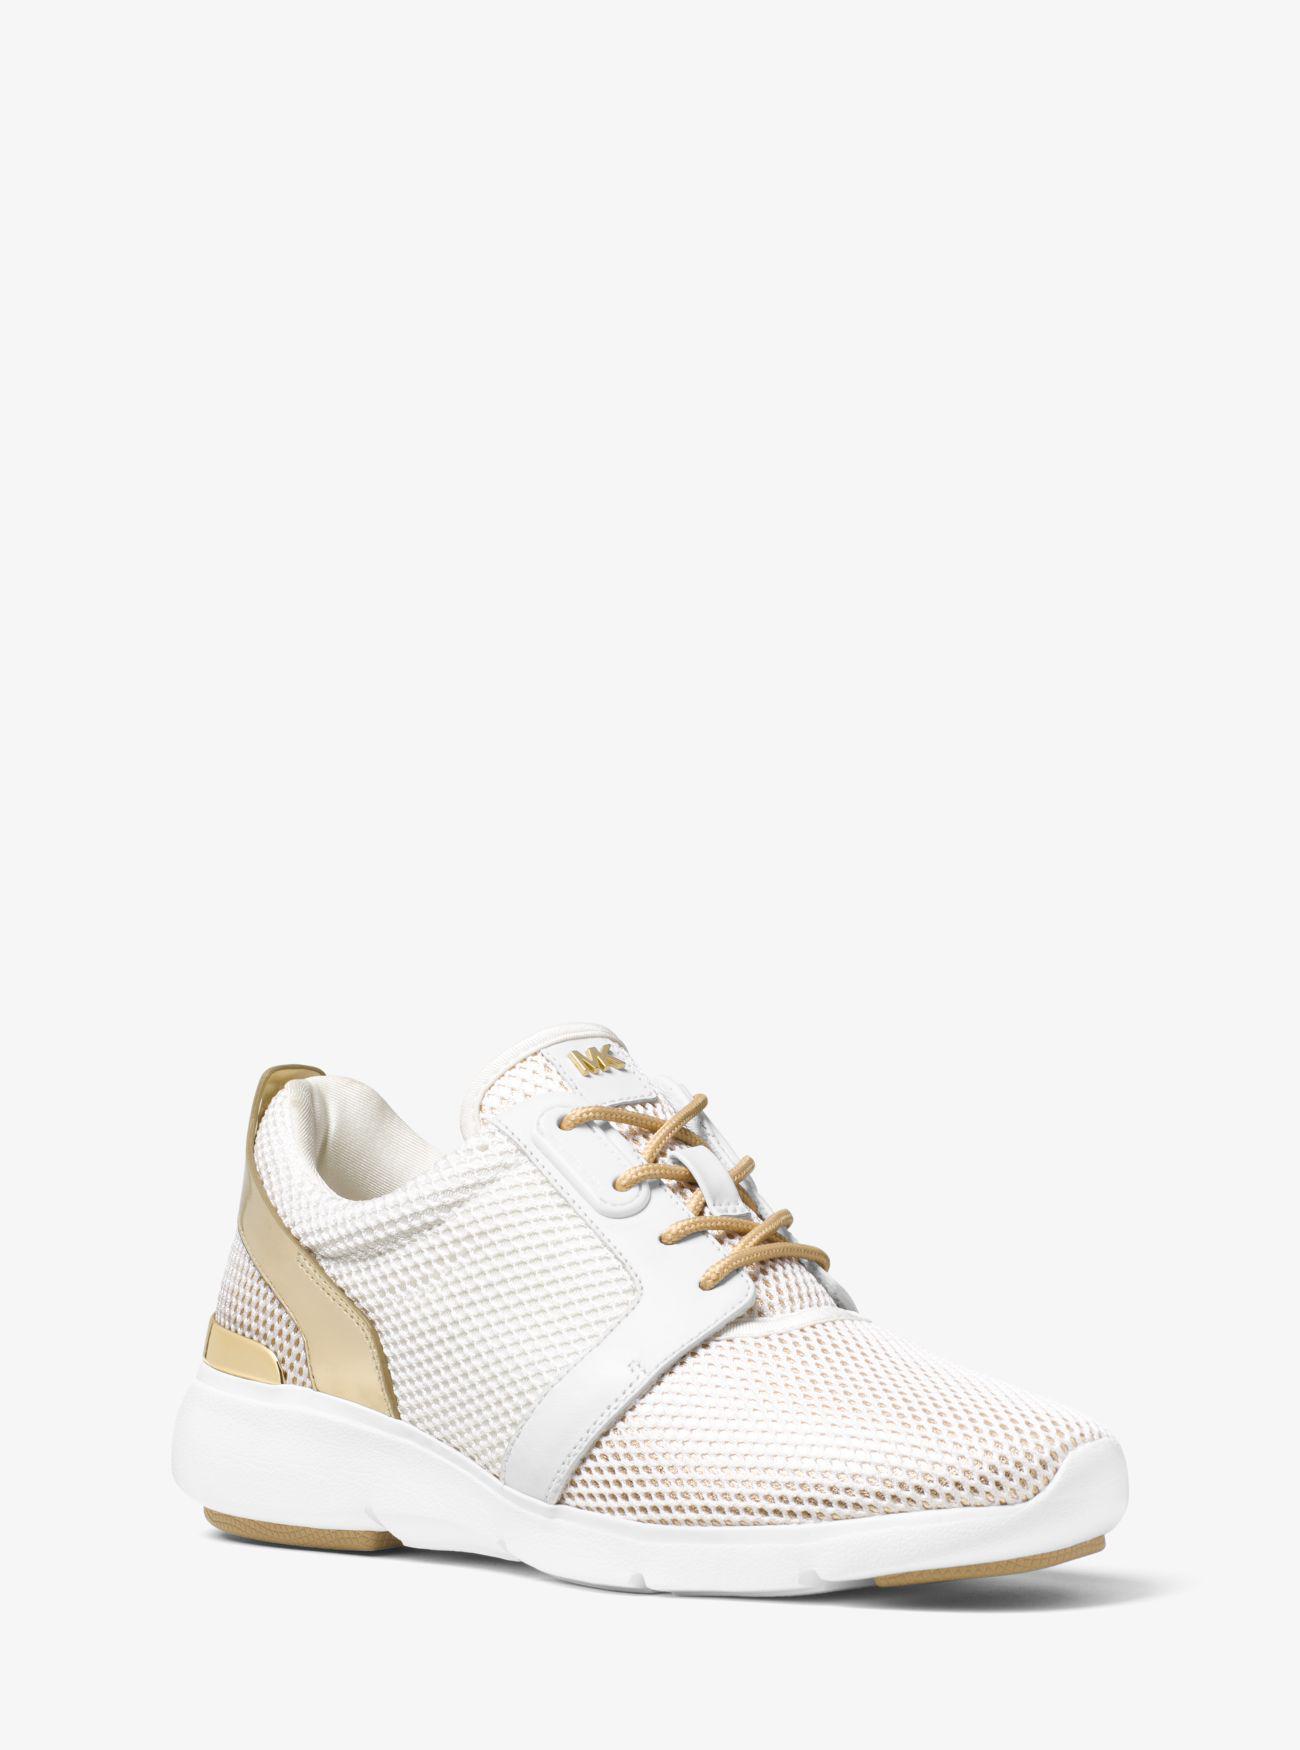 Michael Kors Leather Amanda Mesh Sneaker in White/Pale Gold (White) - Lyst